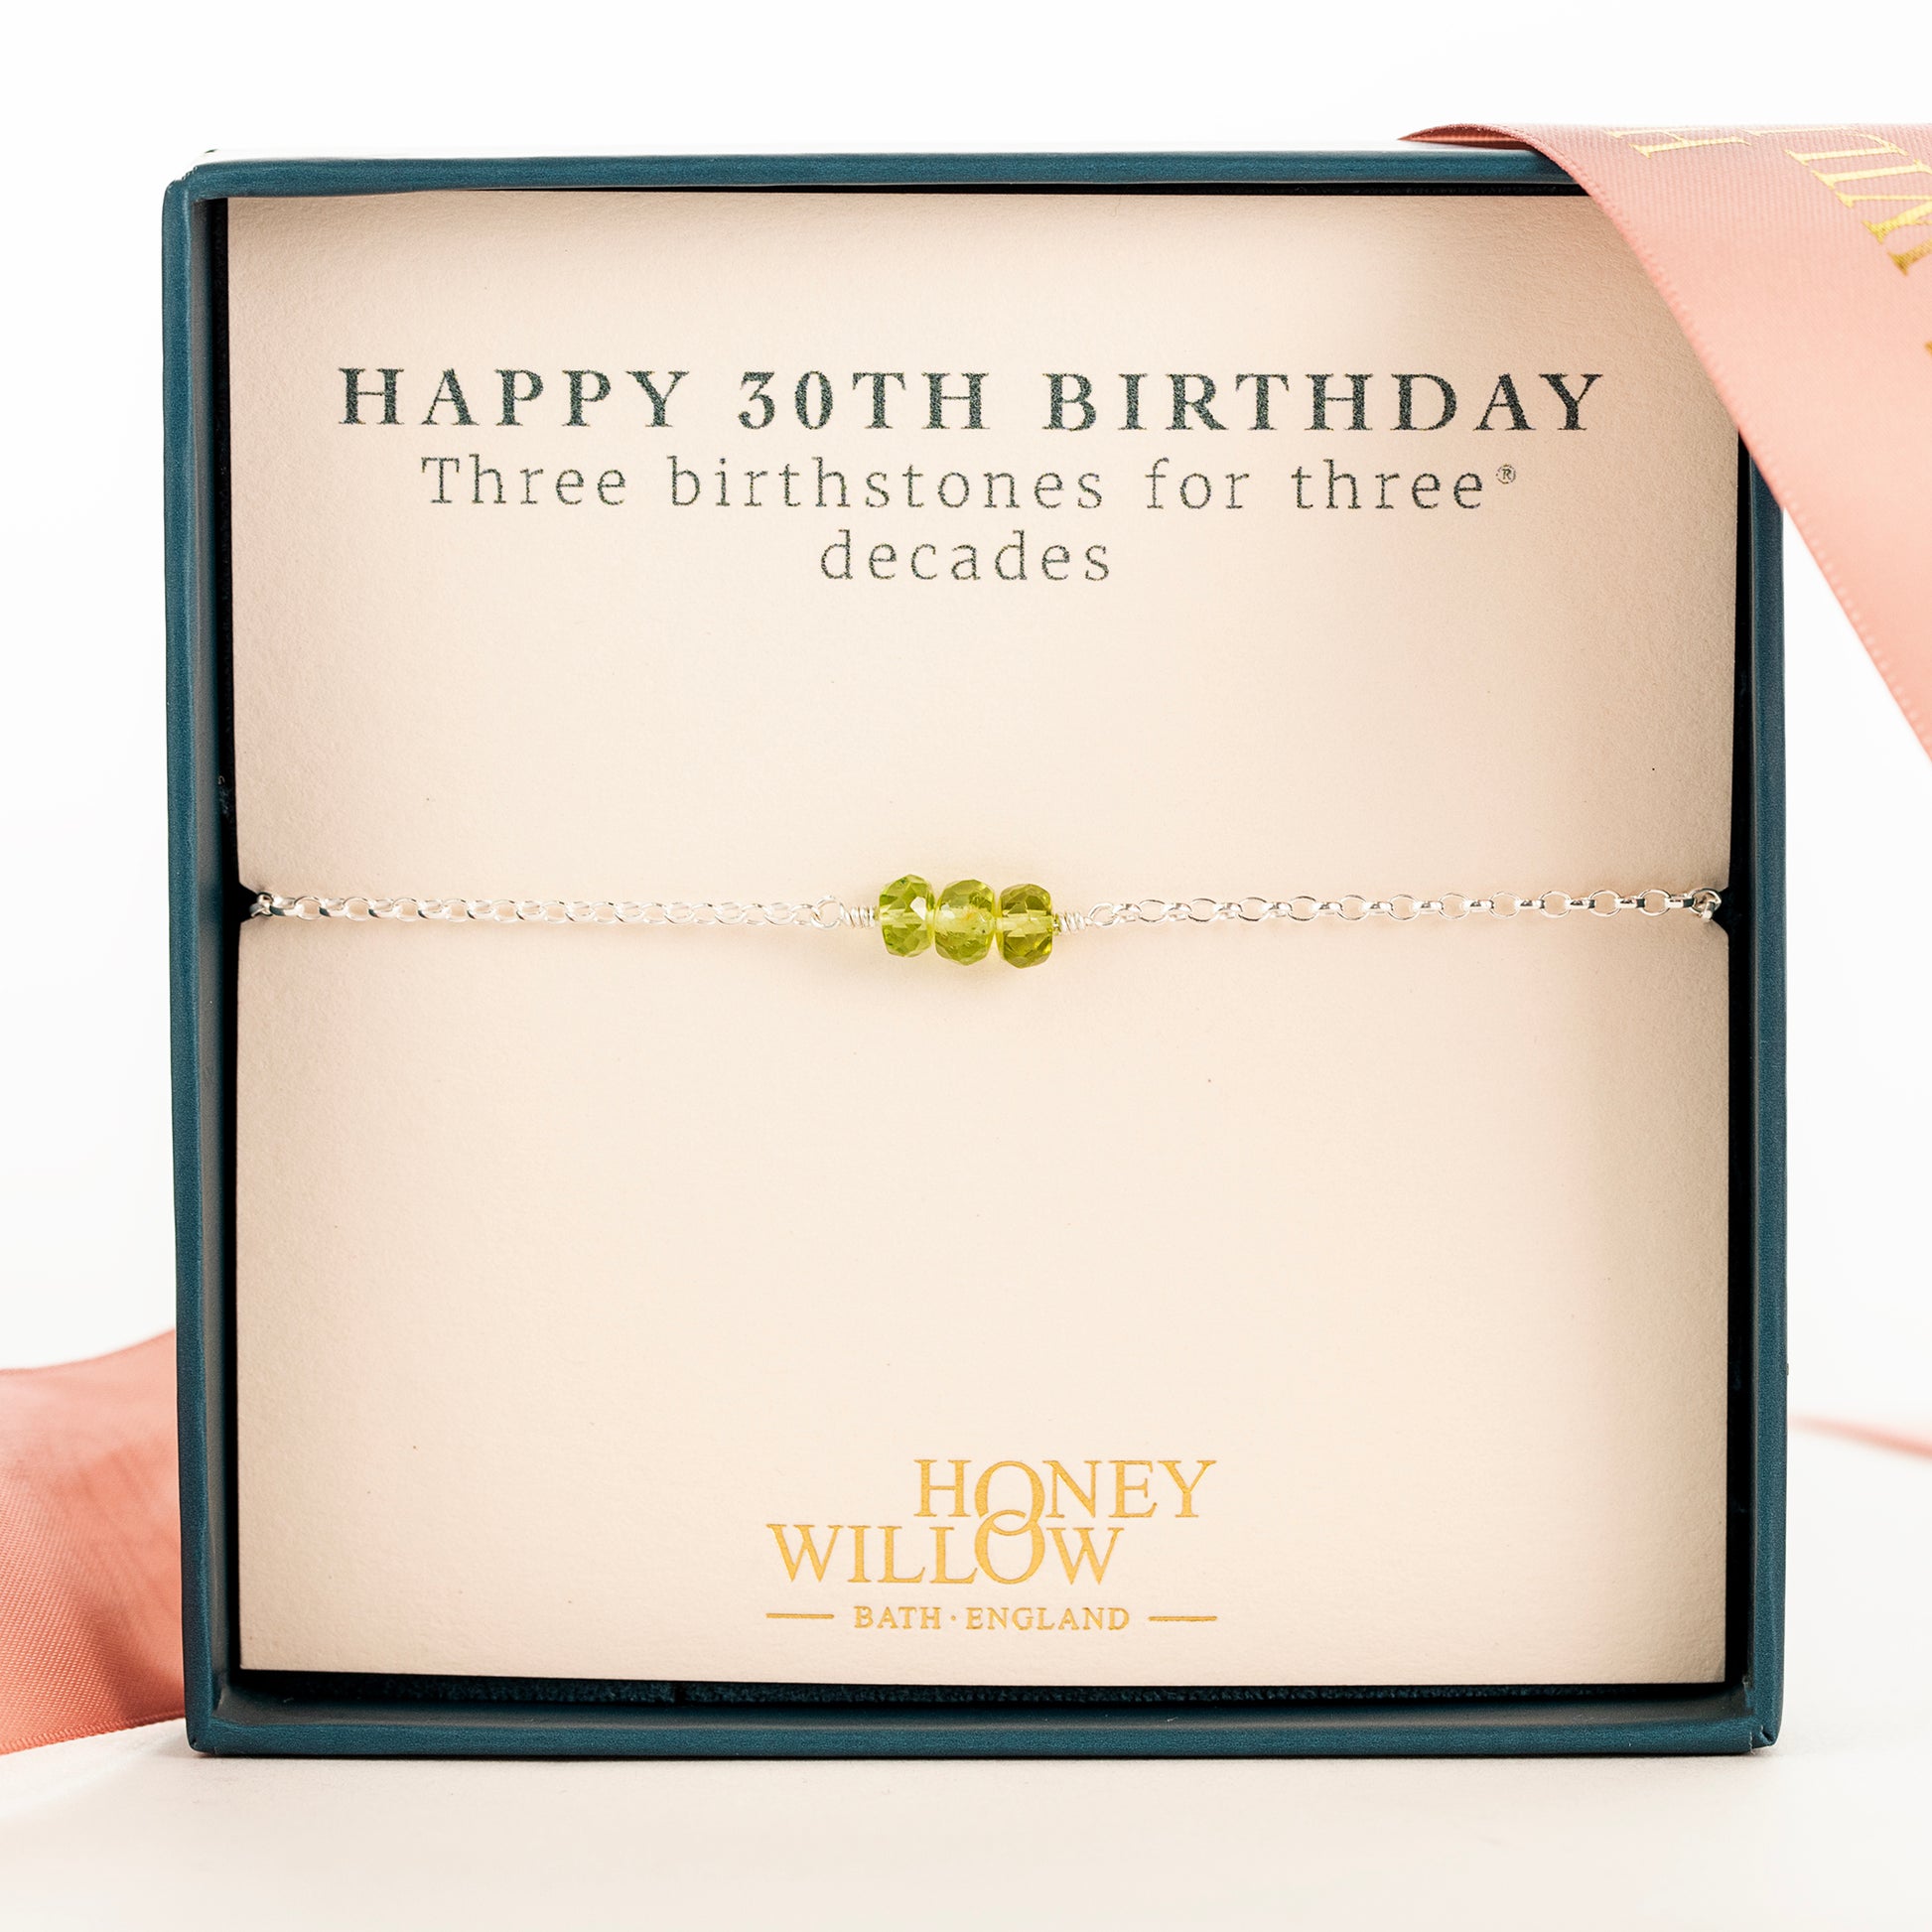 30th Birthday Bracelet - 3 Birthstones for 3 Decades - Silver & Gold